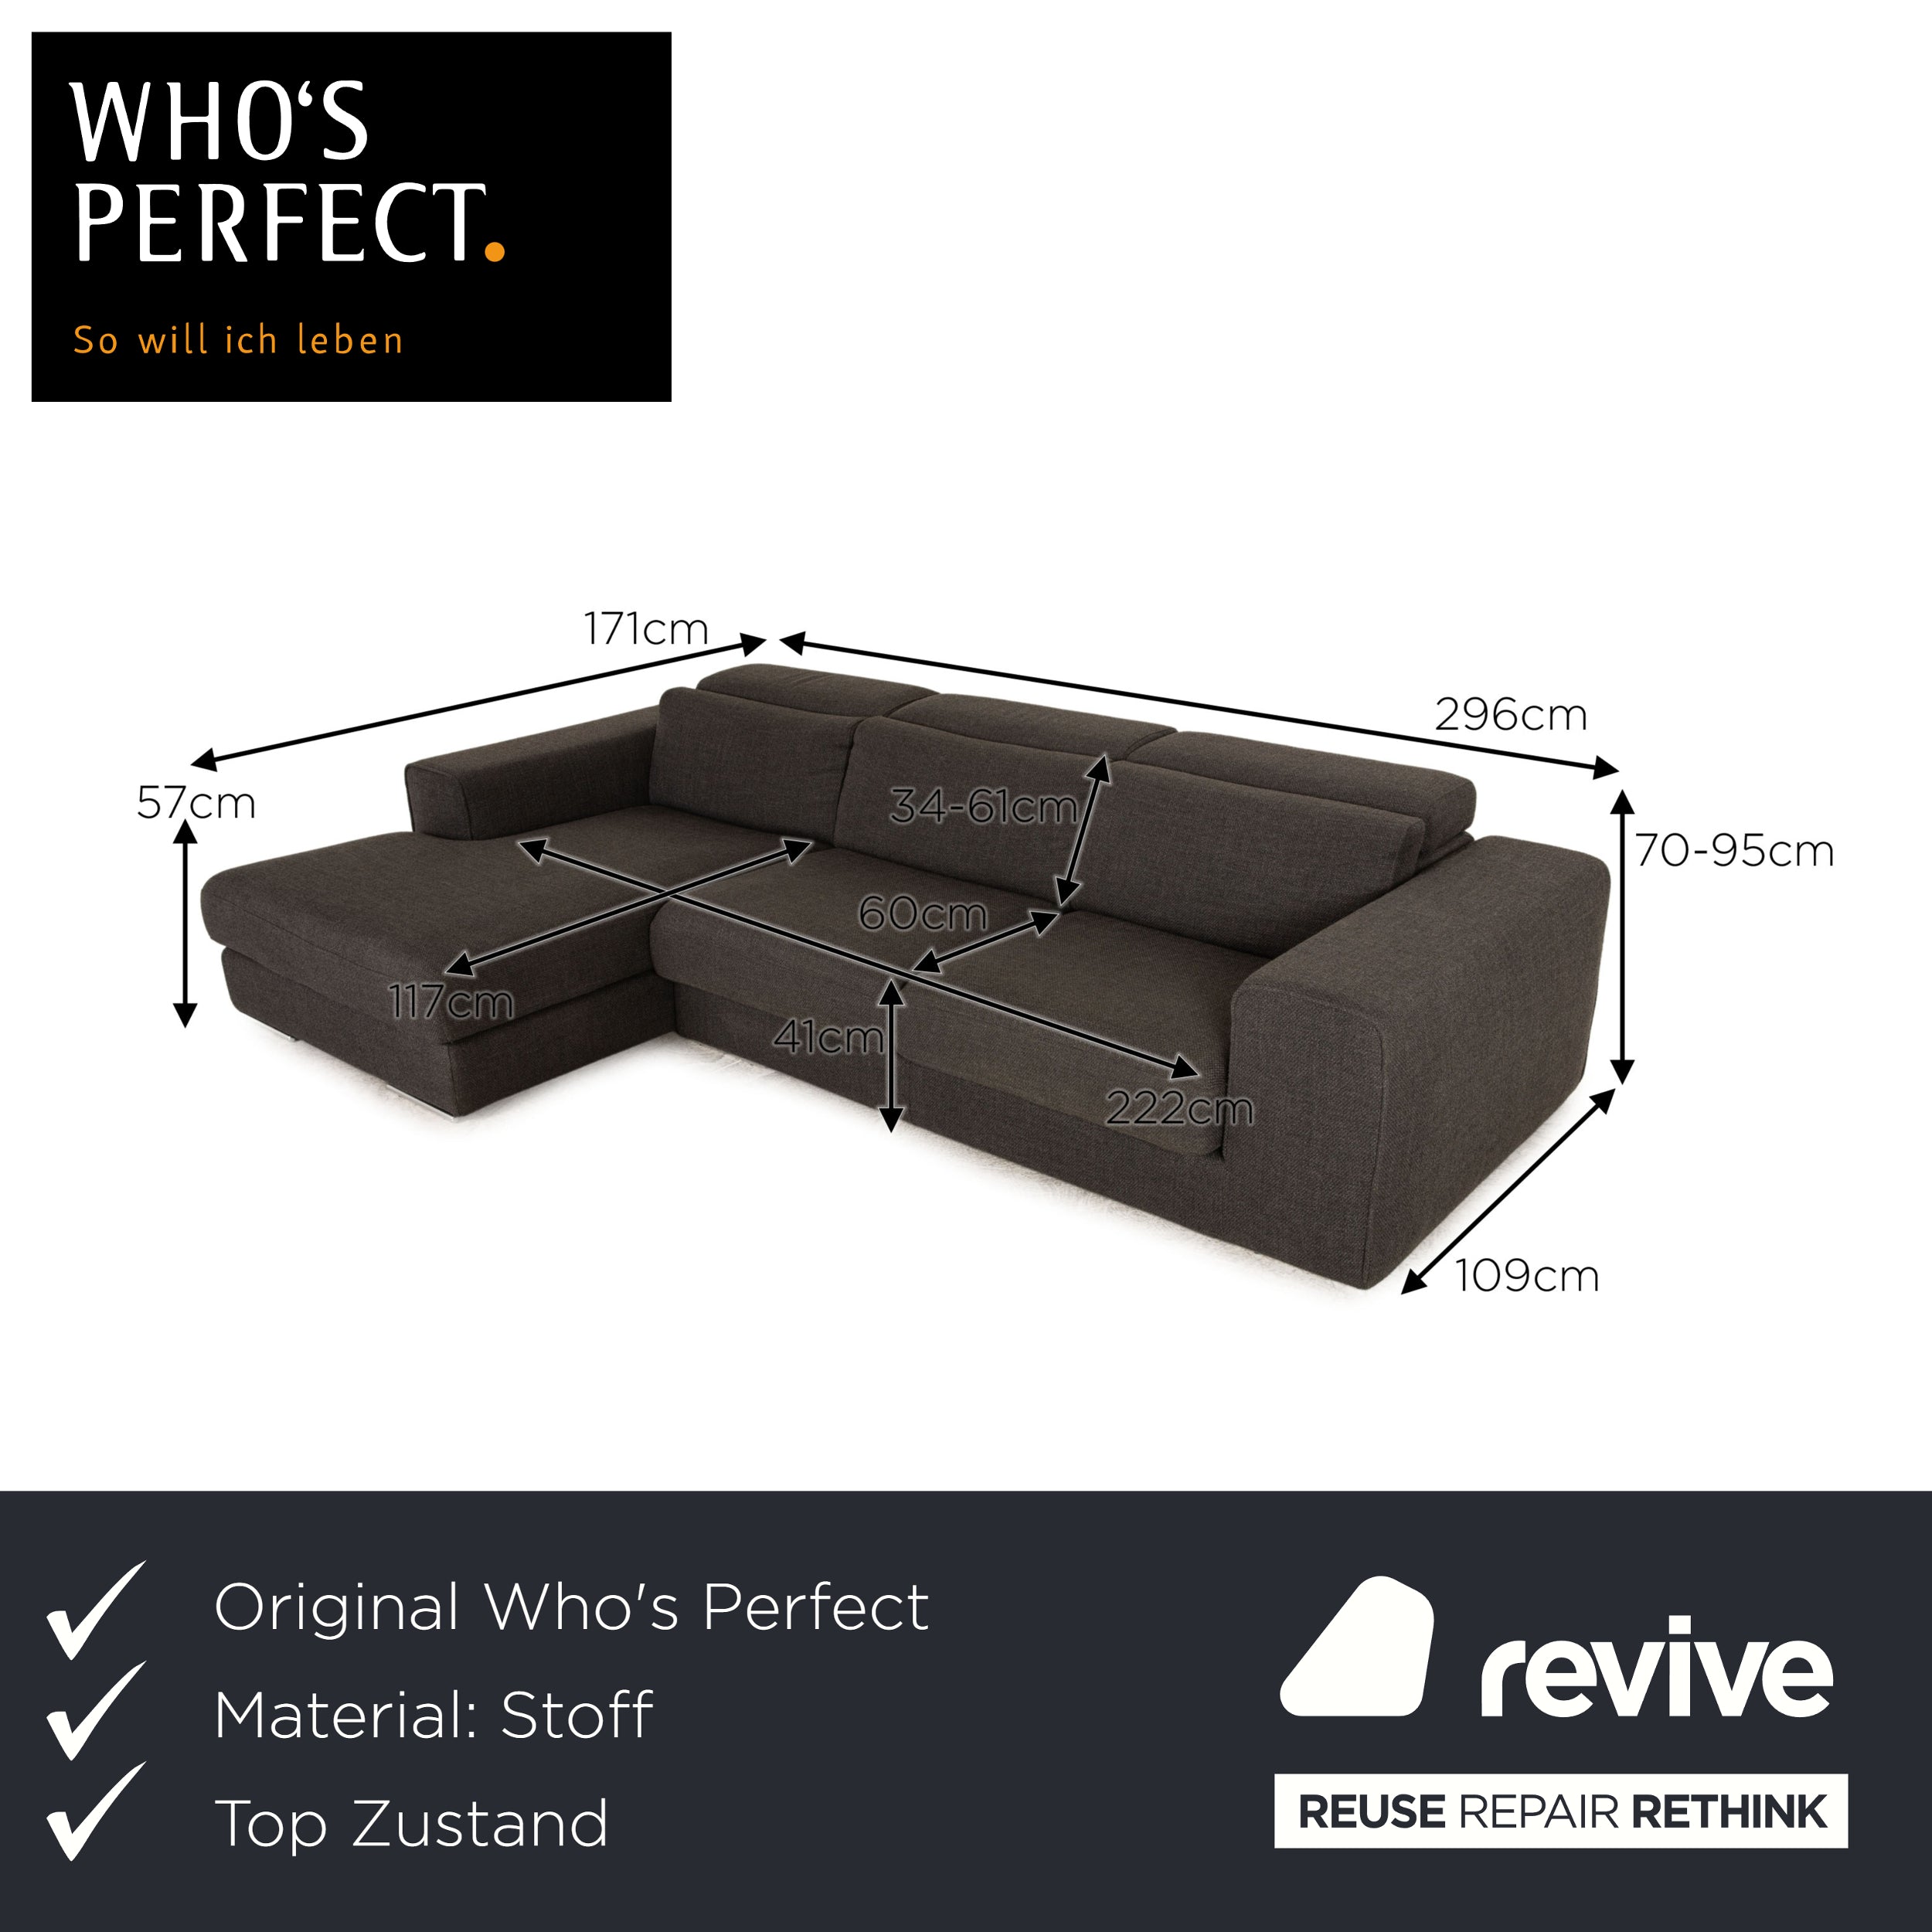 Who's Perfect Avenue Stoff Ecksofa Grau Sofa Couch manuelle Funktion Recamiere links